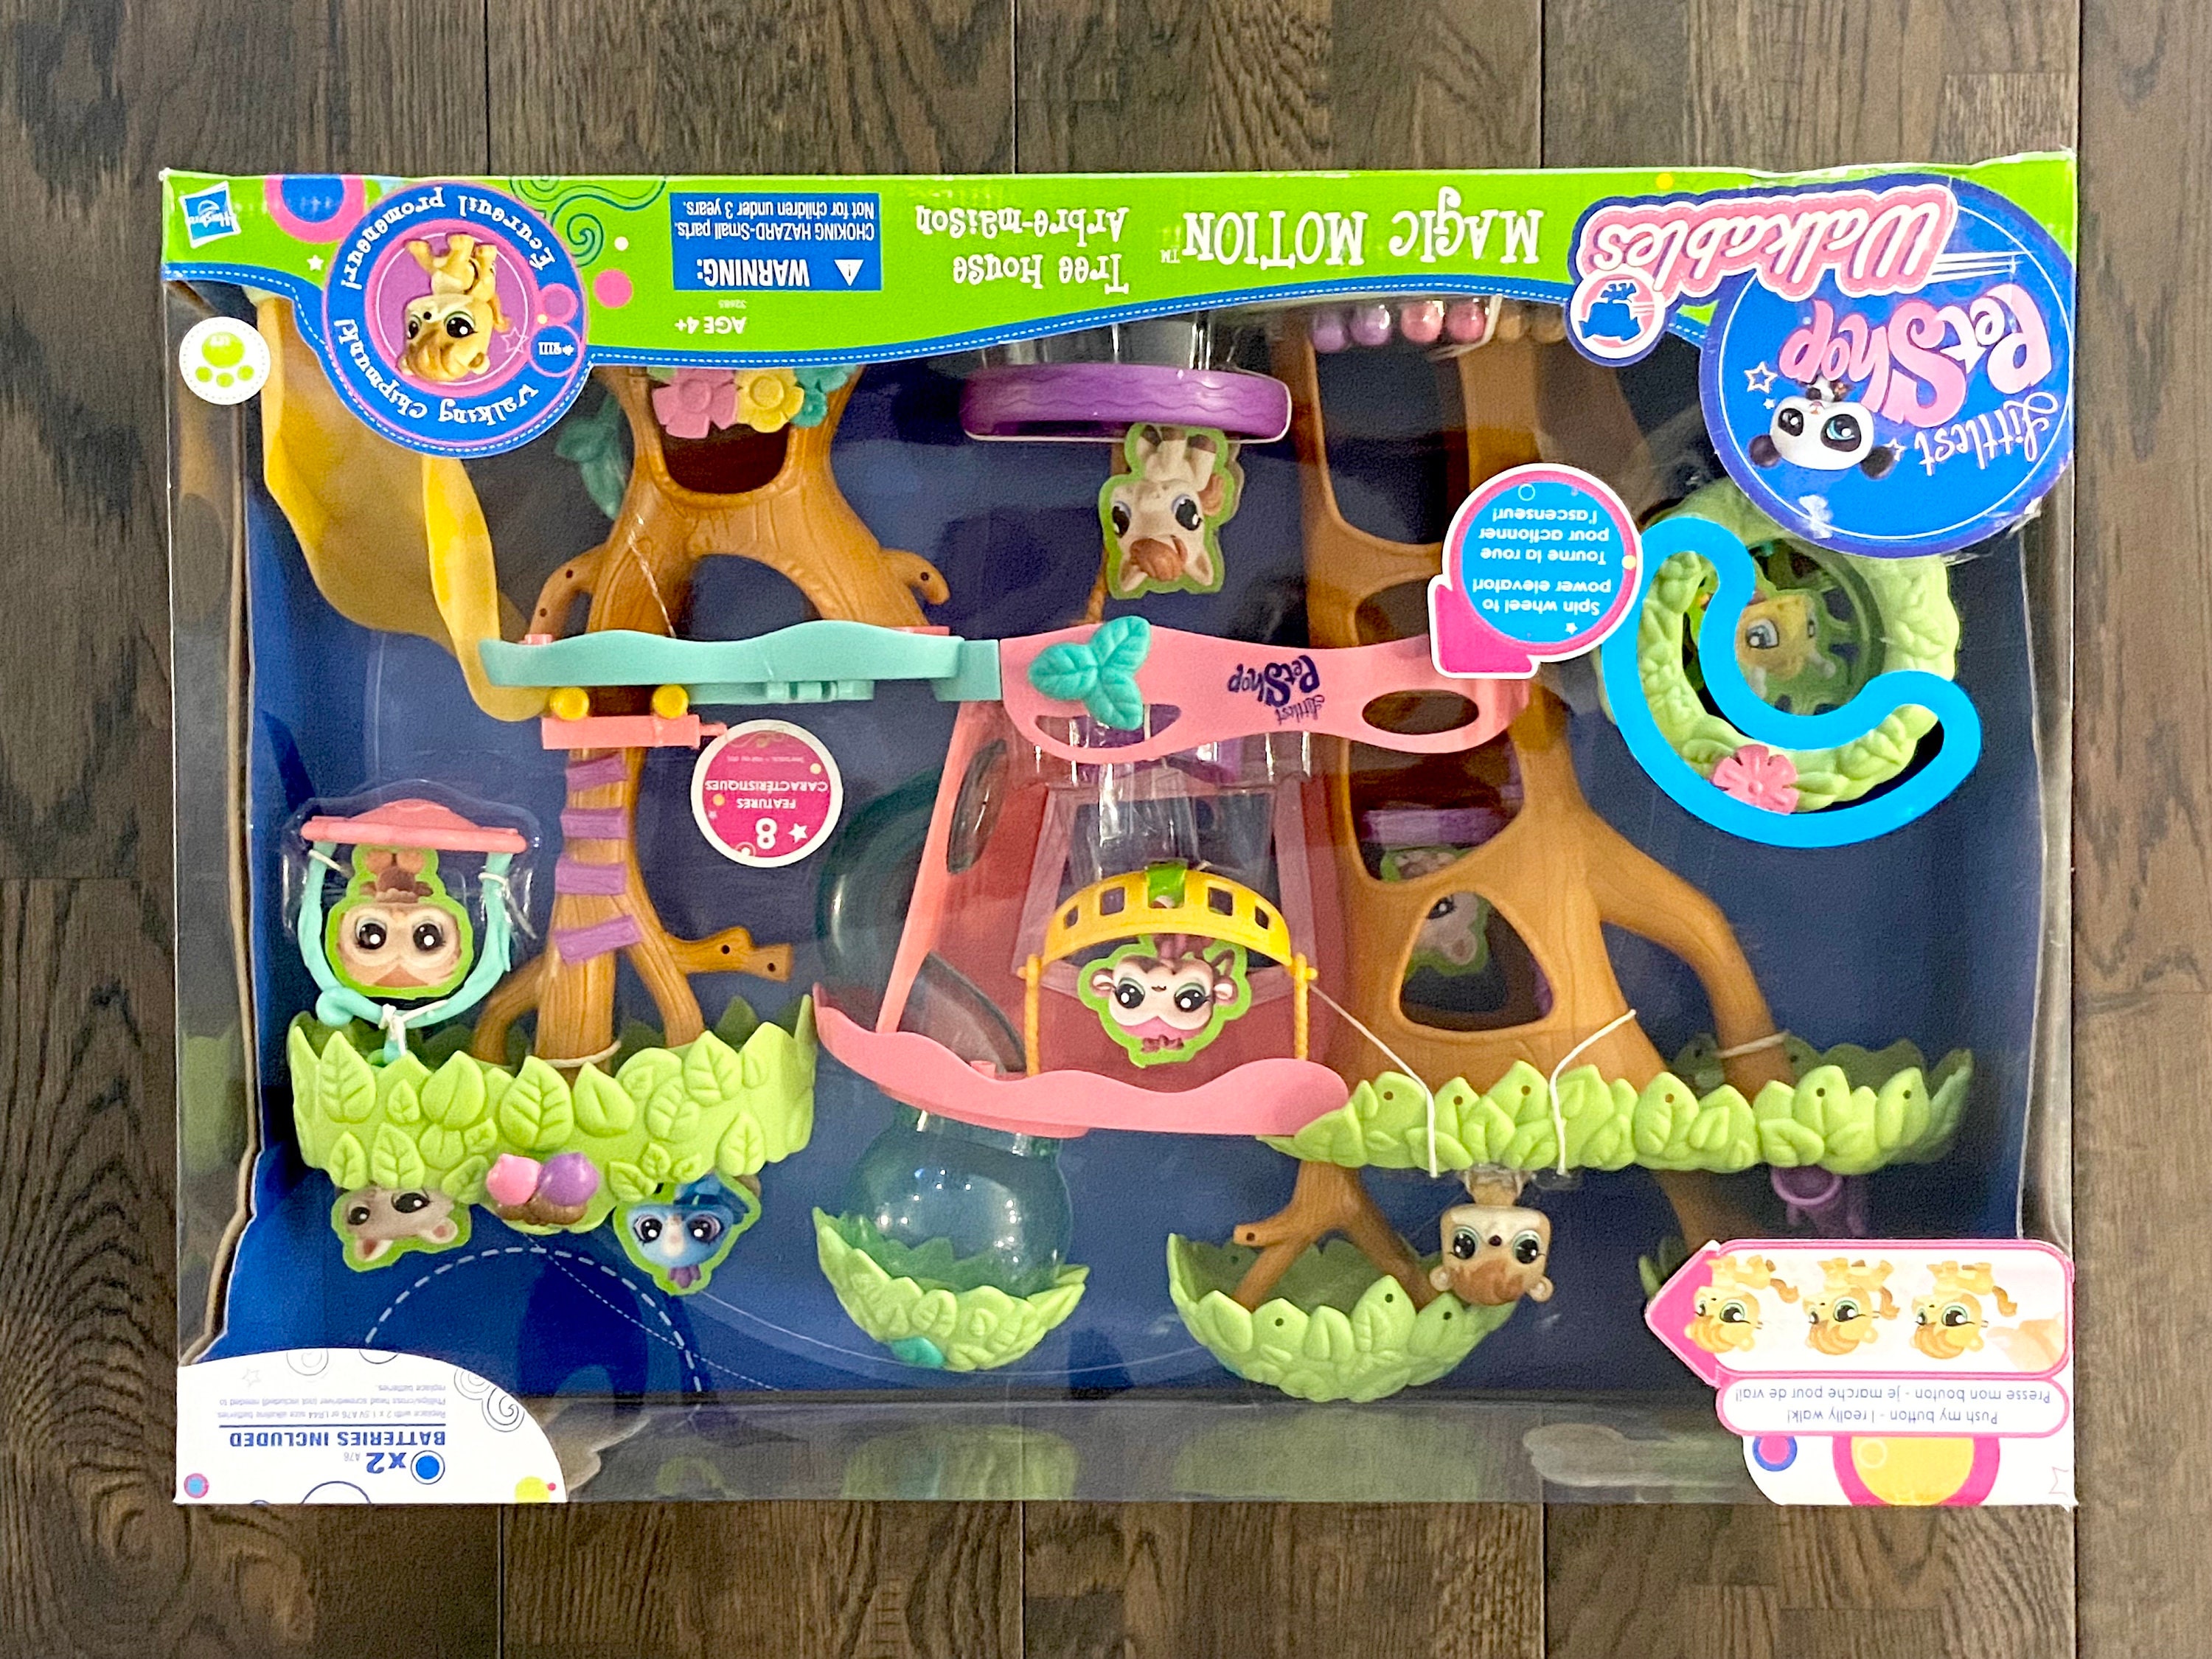 Littlest Pet Shop Hasbro Toy Folding House Get Better Center Play Set Lot  RARE!